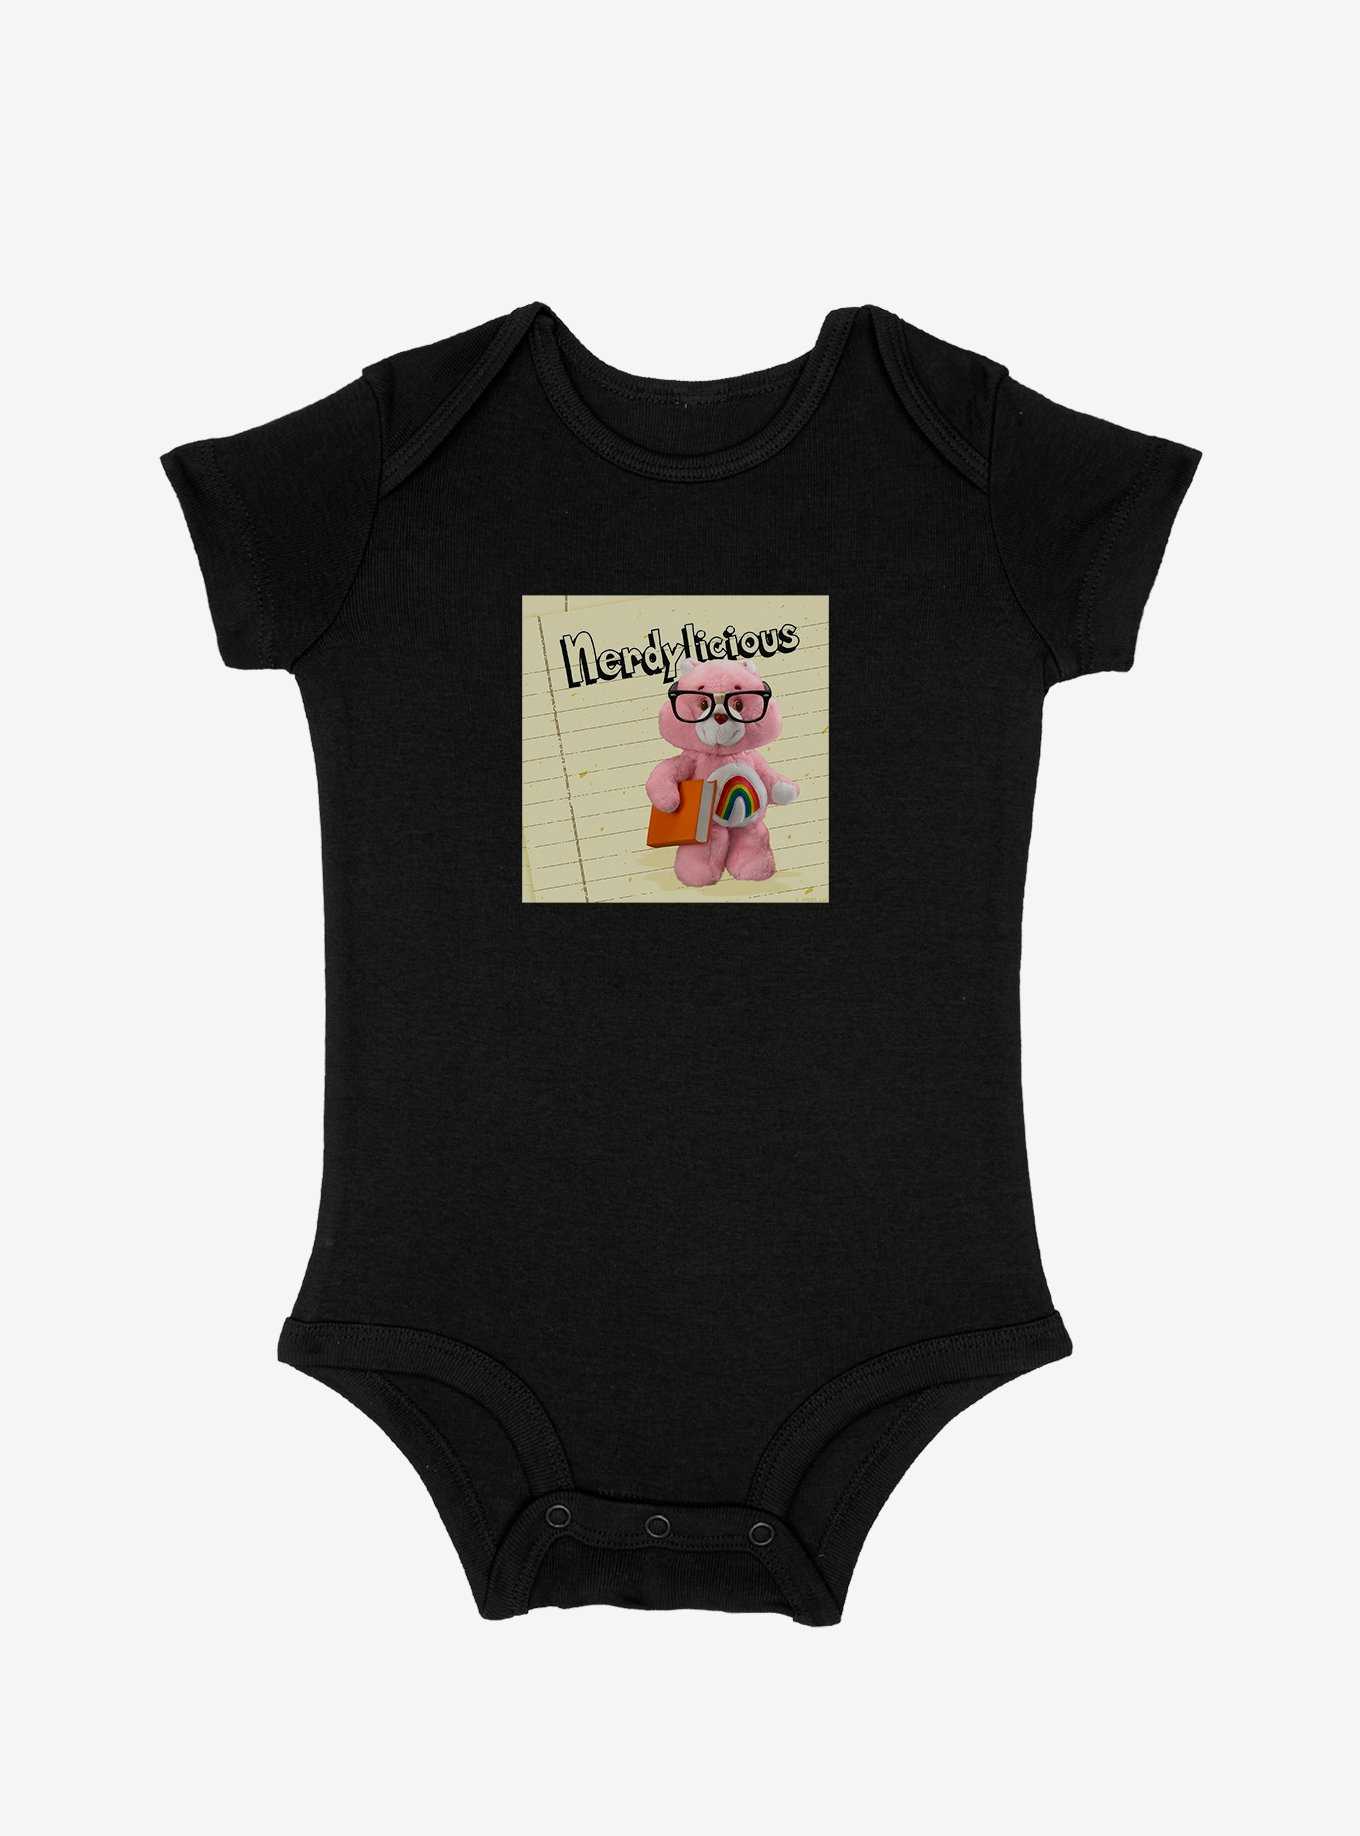 Care Bears Nerdylicious Infant Bodysuit, , hi-res